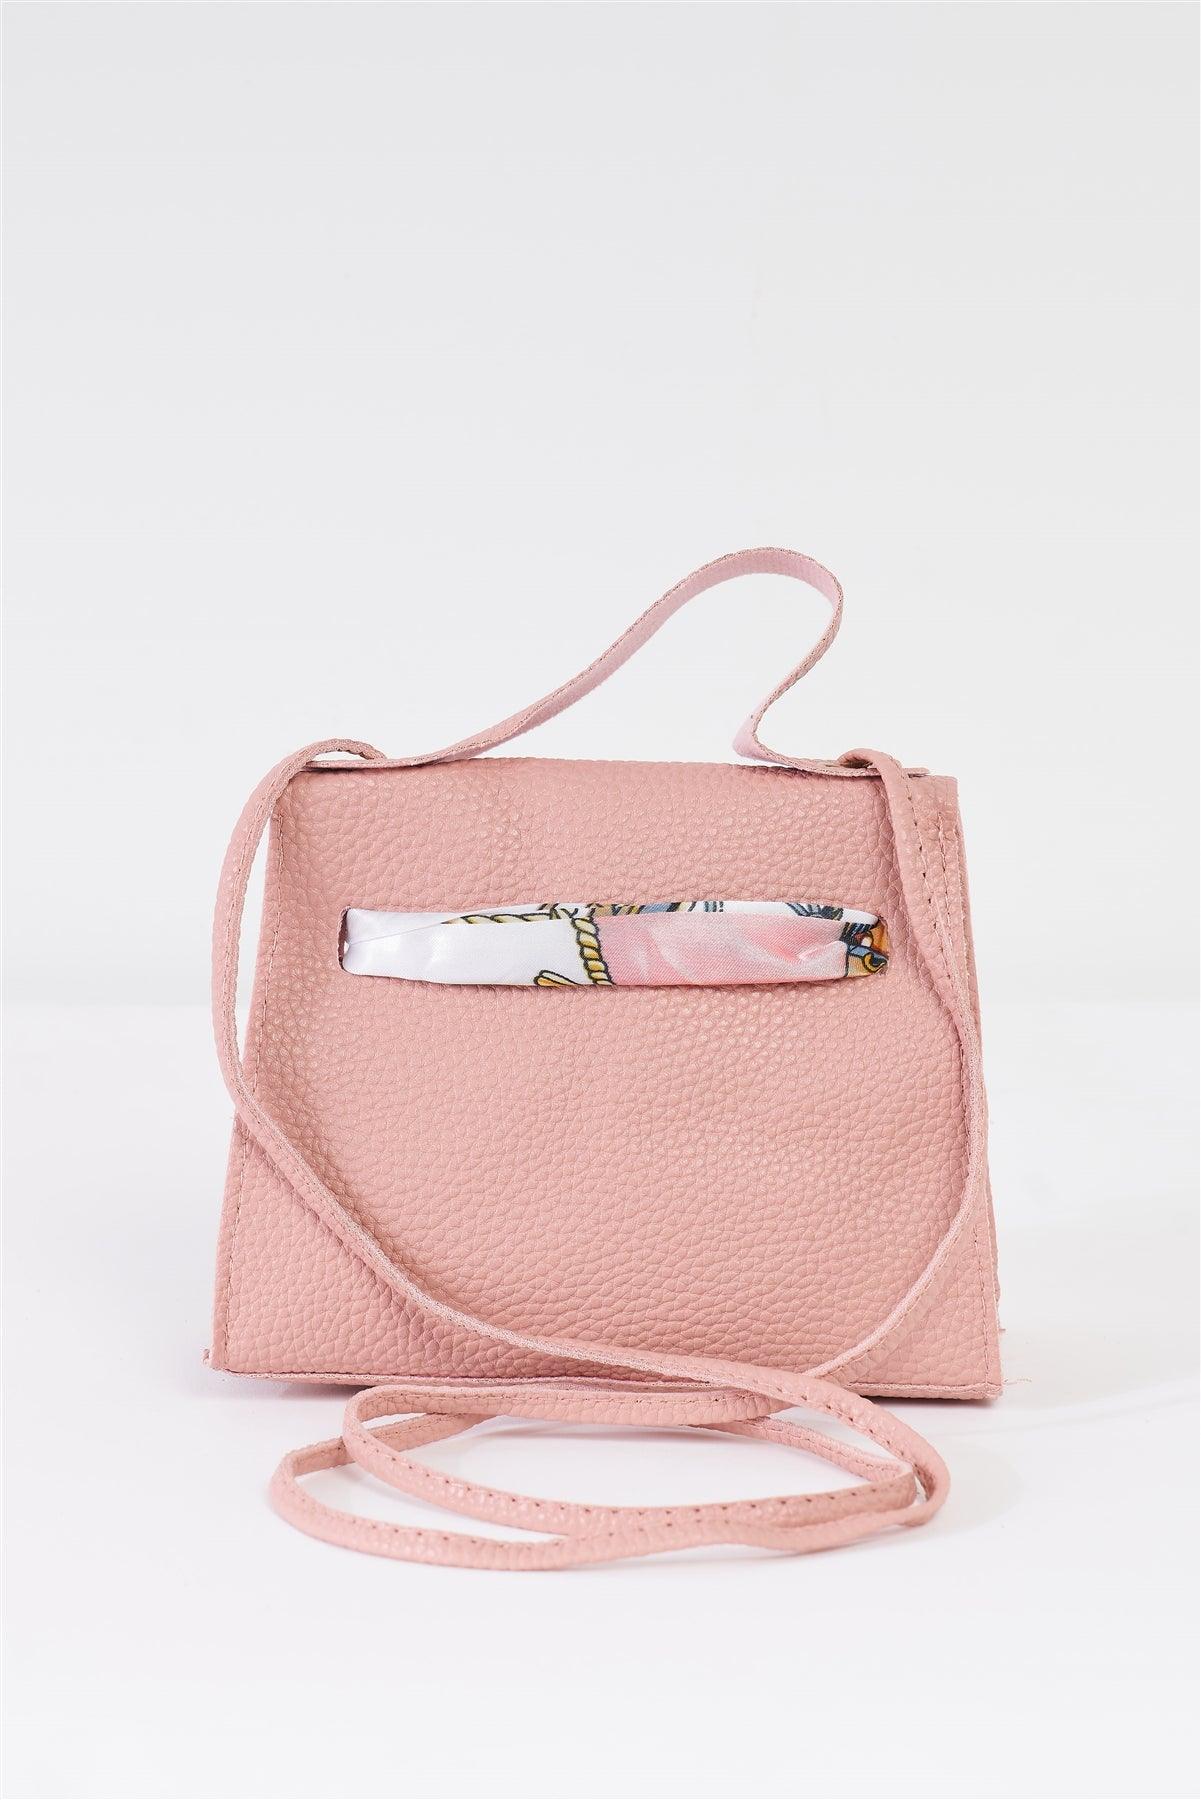 Mauve Textured Pleather Satin Printed Twilly Scarf Detail Flap Satchel Handbag /3 Bags